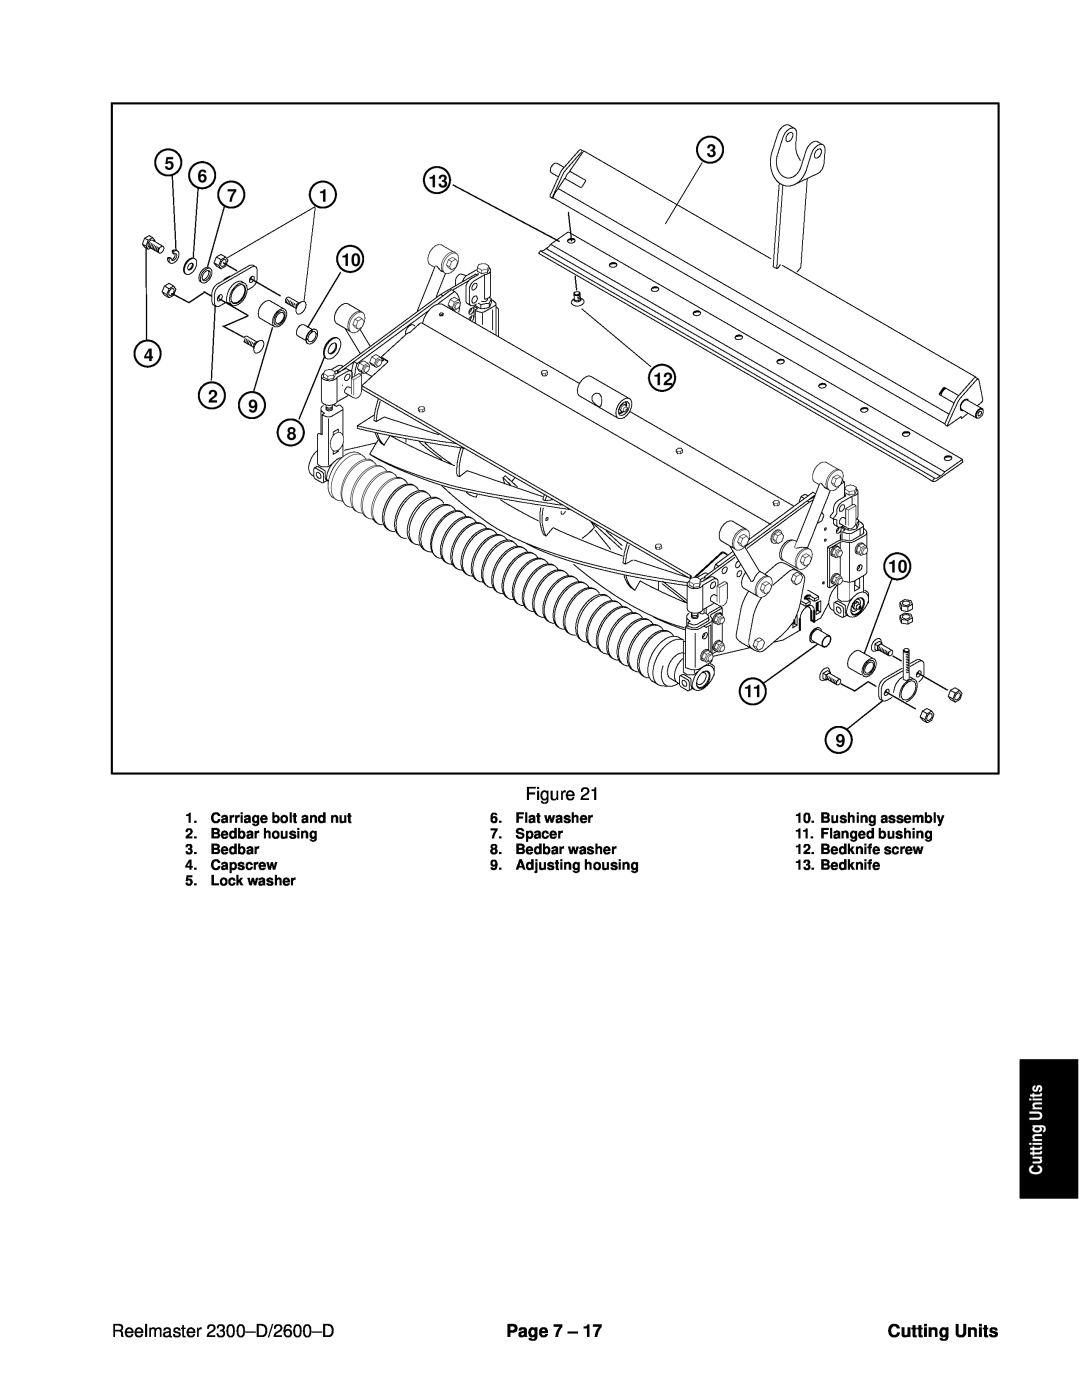 Toro 2600D, 2300-D service manual Cutting Units, Reelmaster 2300±D/2600±D, Page 7 ±, Bushing assembly 